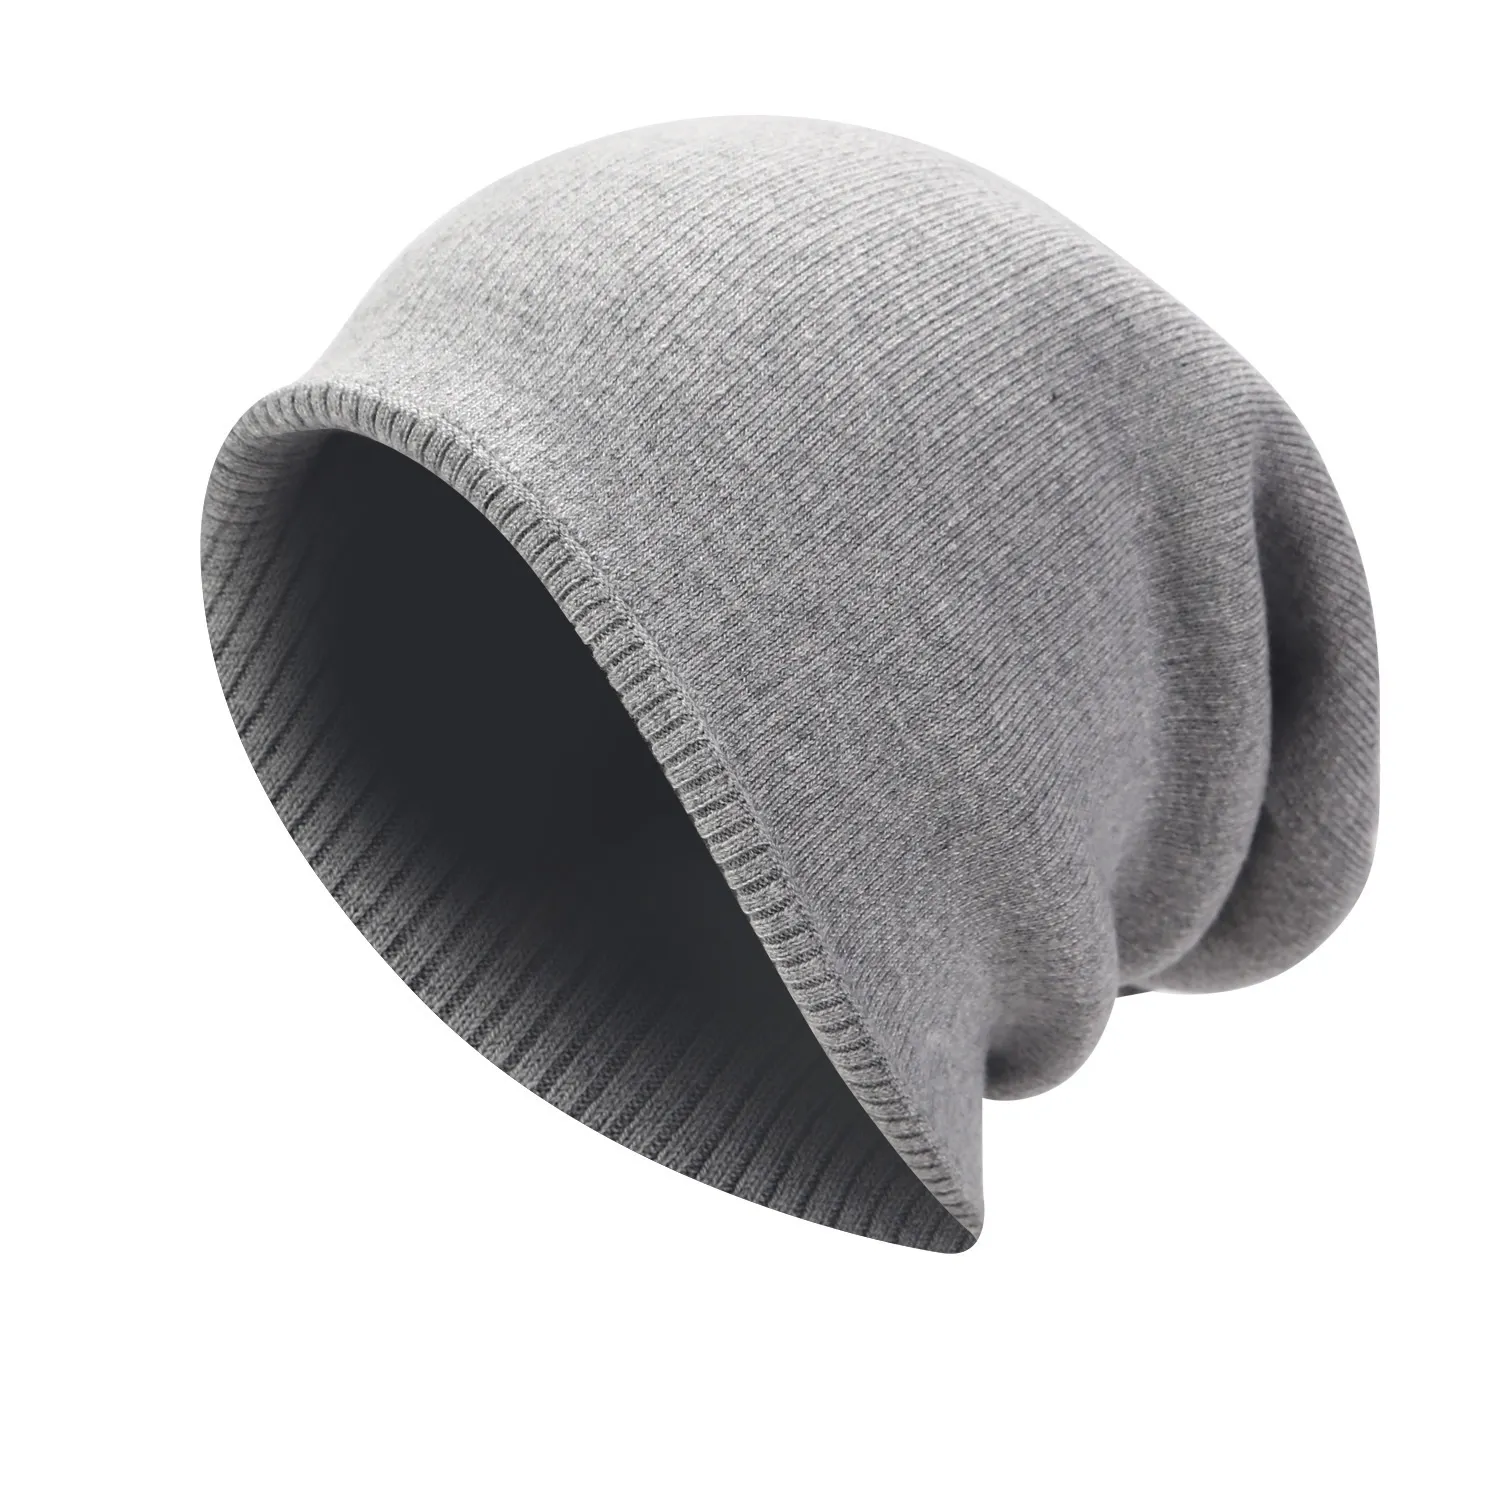 Mens Winter Hat Wool Beanies Knit Warm Comfortable Gorras Bonnet Skullies Young Woman Hip Hop Fashion Style Hat14157505174064